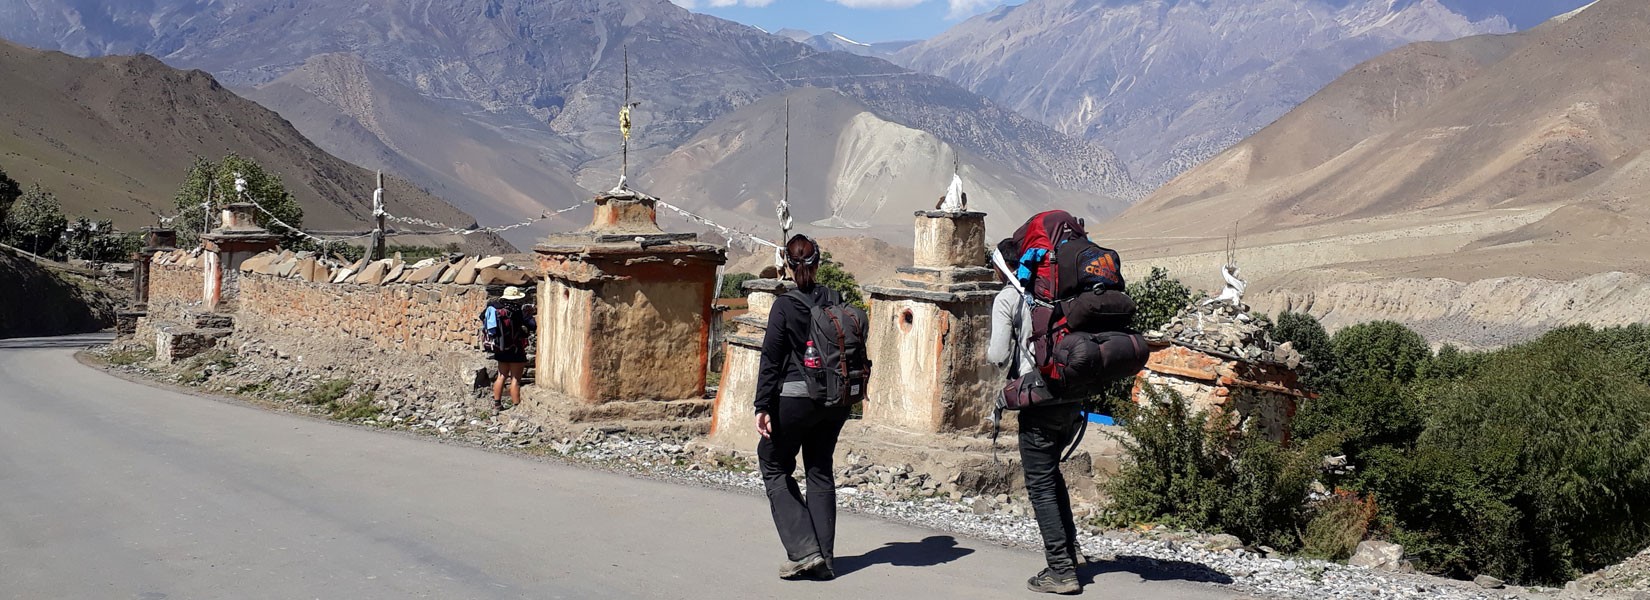 Annapurna circuit trek after pass